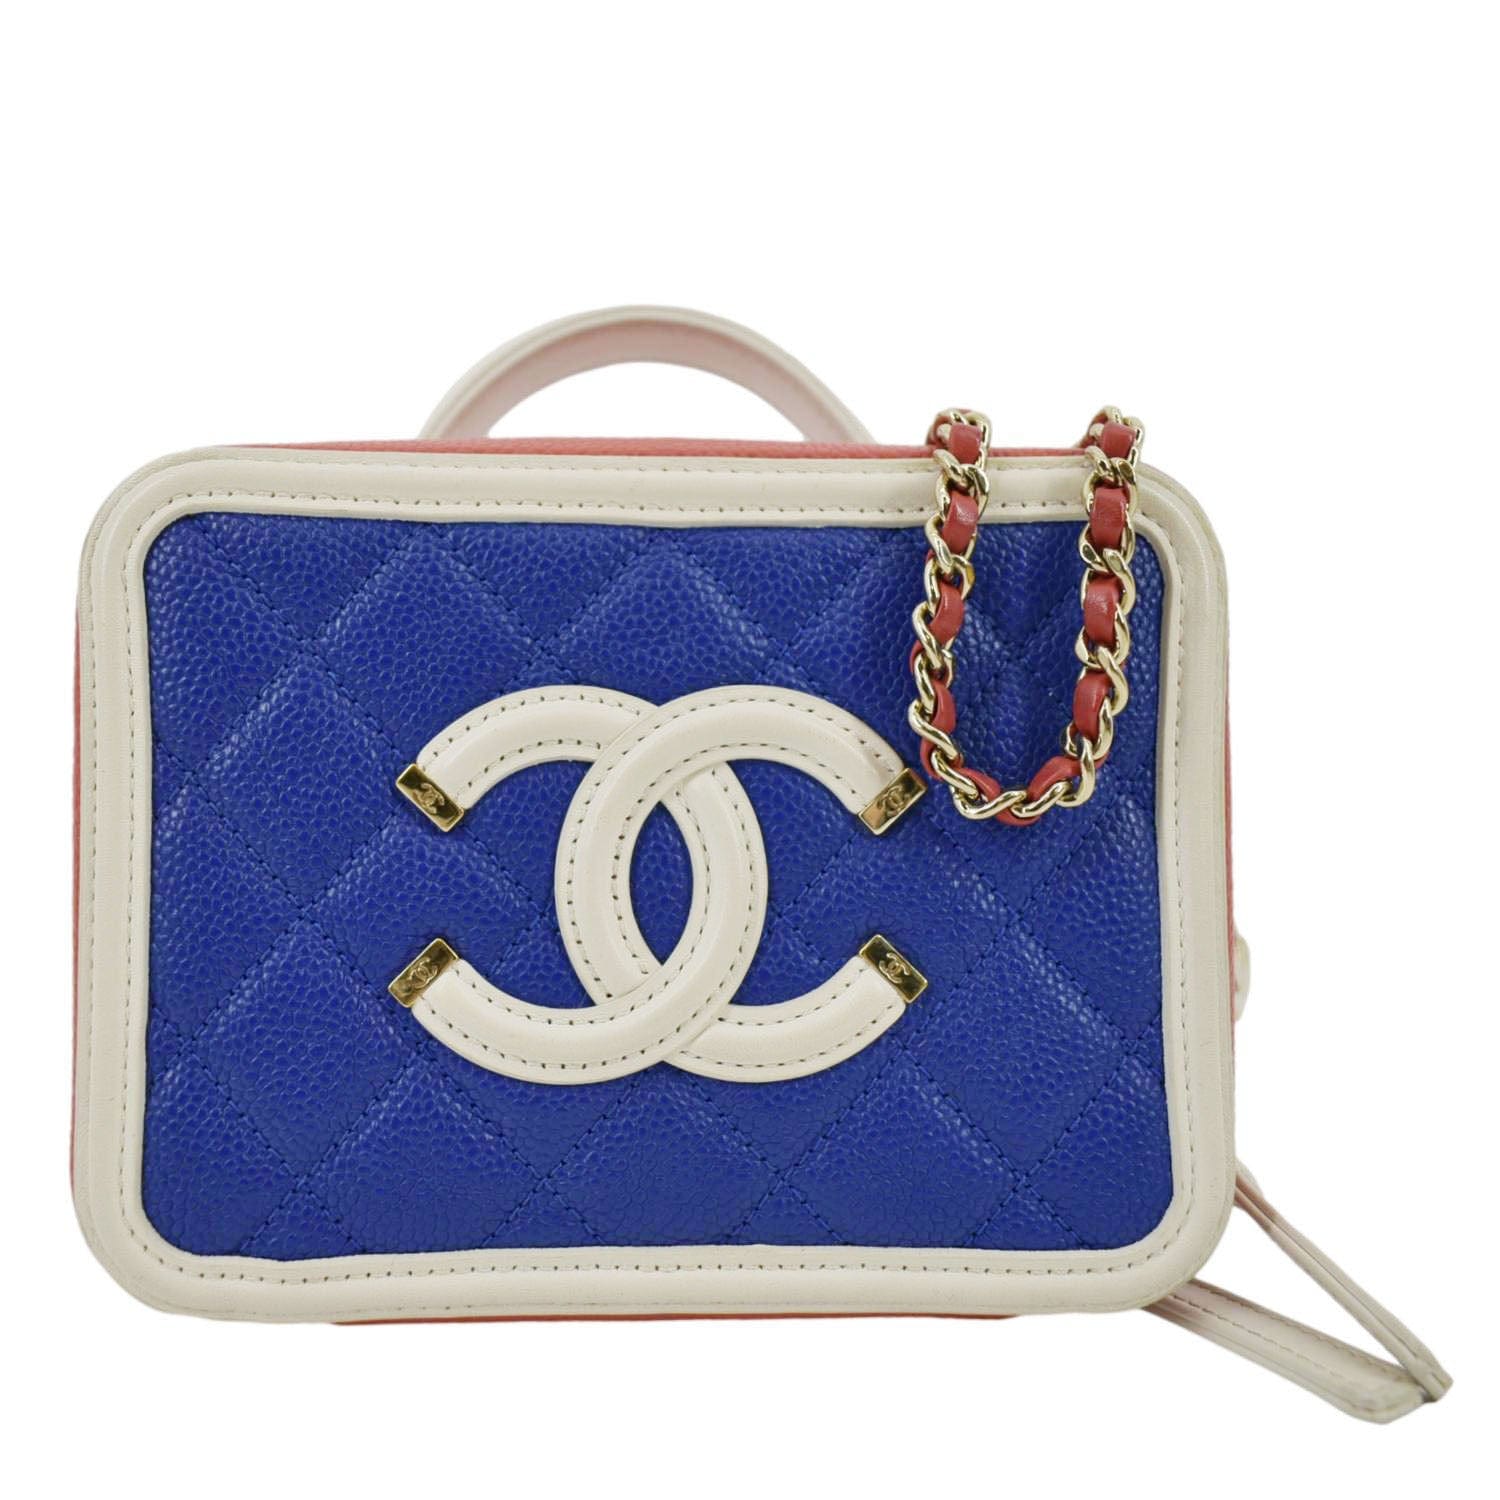 Chanel Cc Caviar Vanity Bag